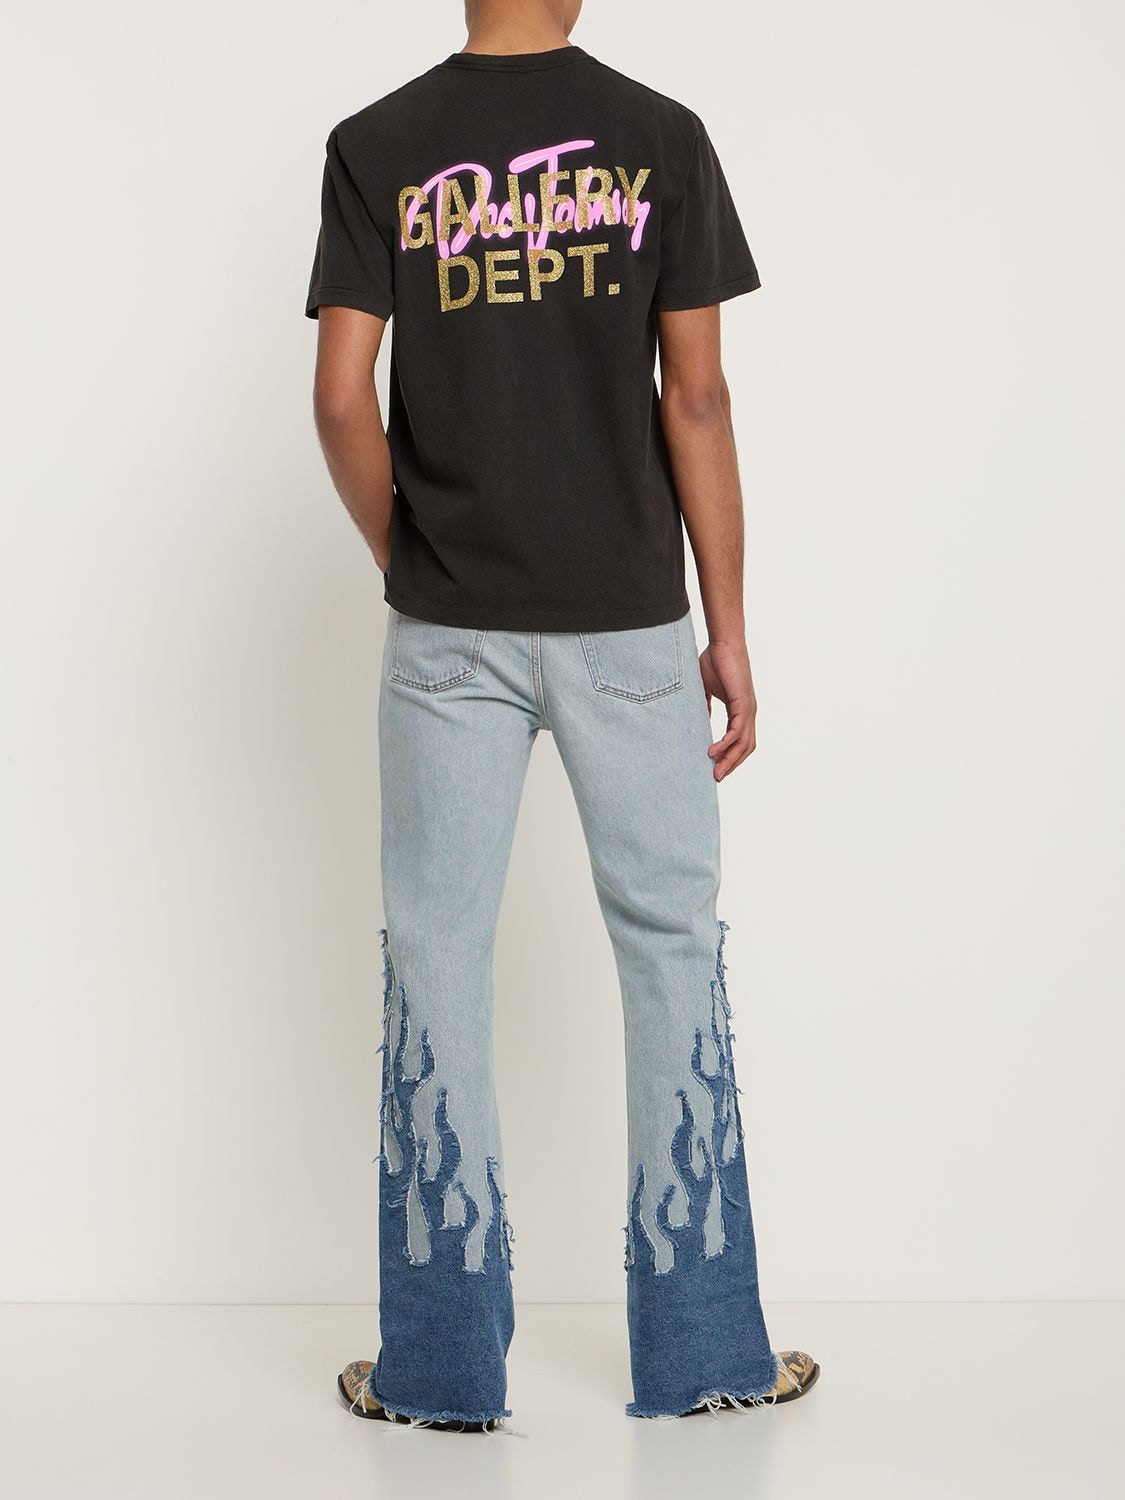 GALLERY DEPT. Body Cocktails Cotton Jersey T-shirt | Smart Closet